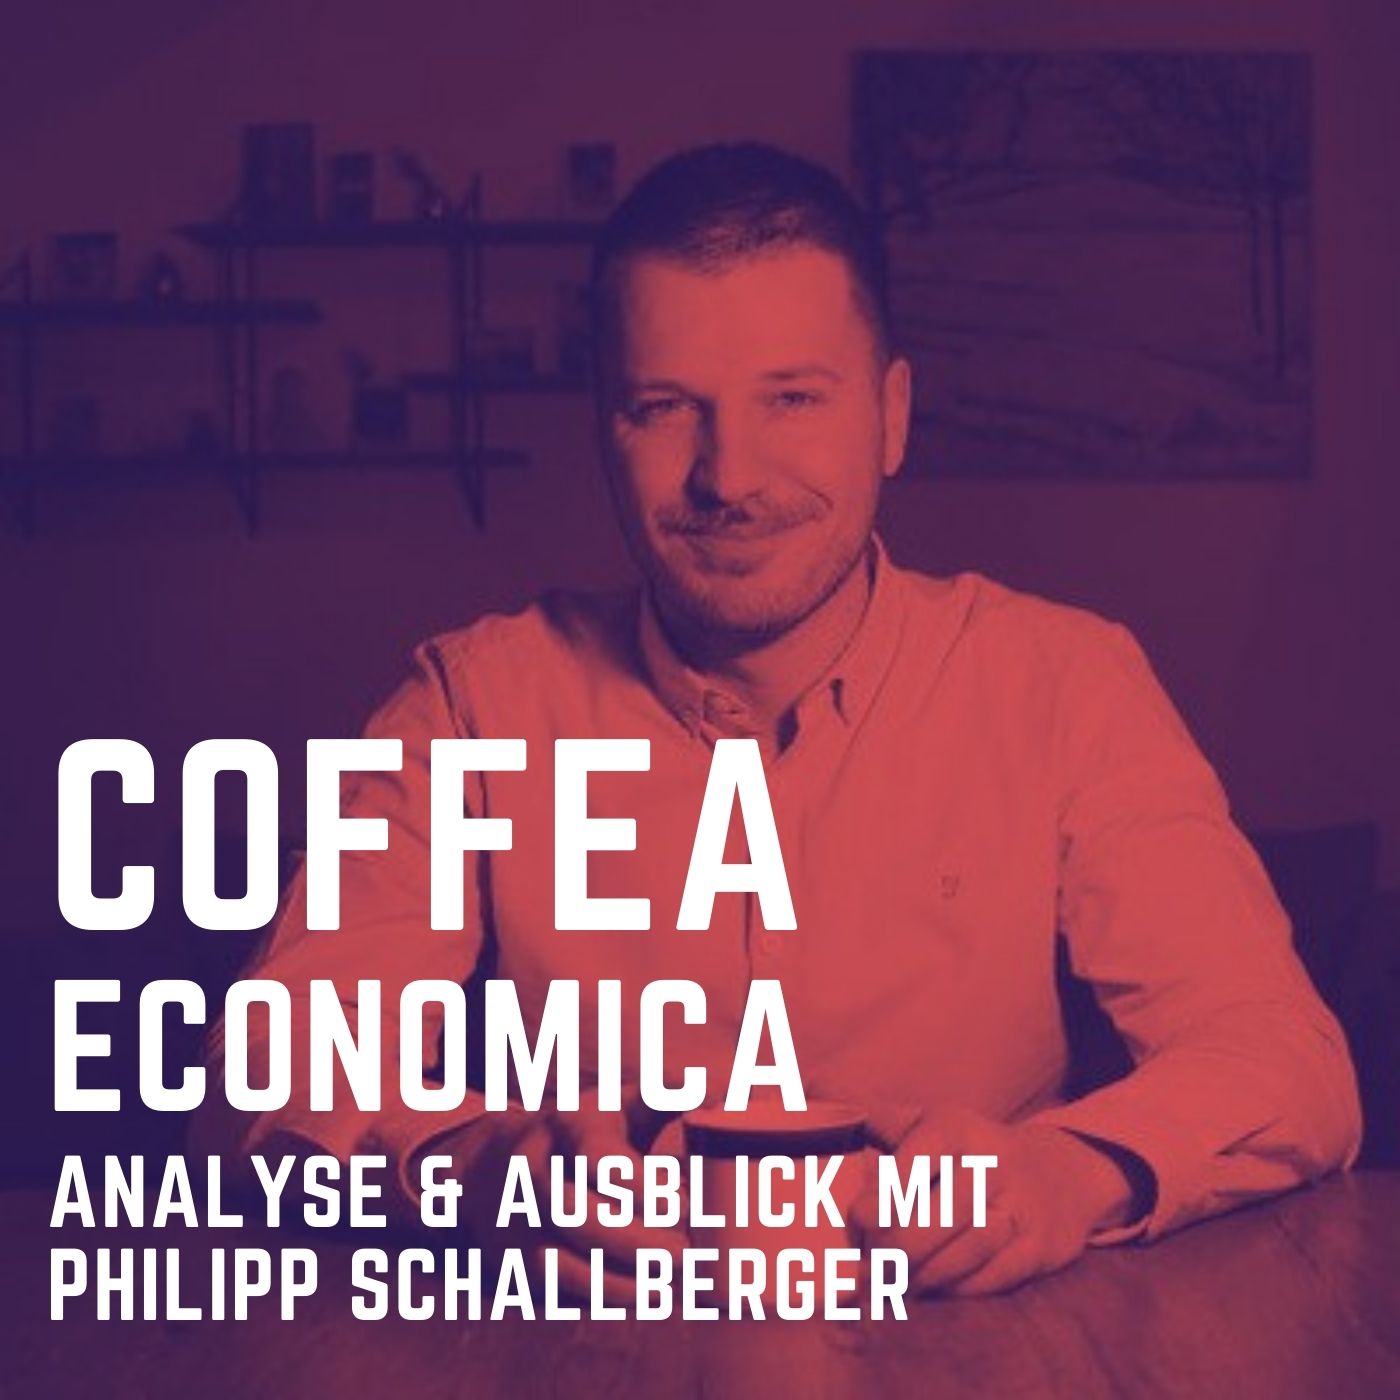 Coffea Economica: Philipp Schallberger, Analyse & Ausblick